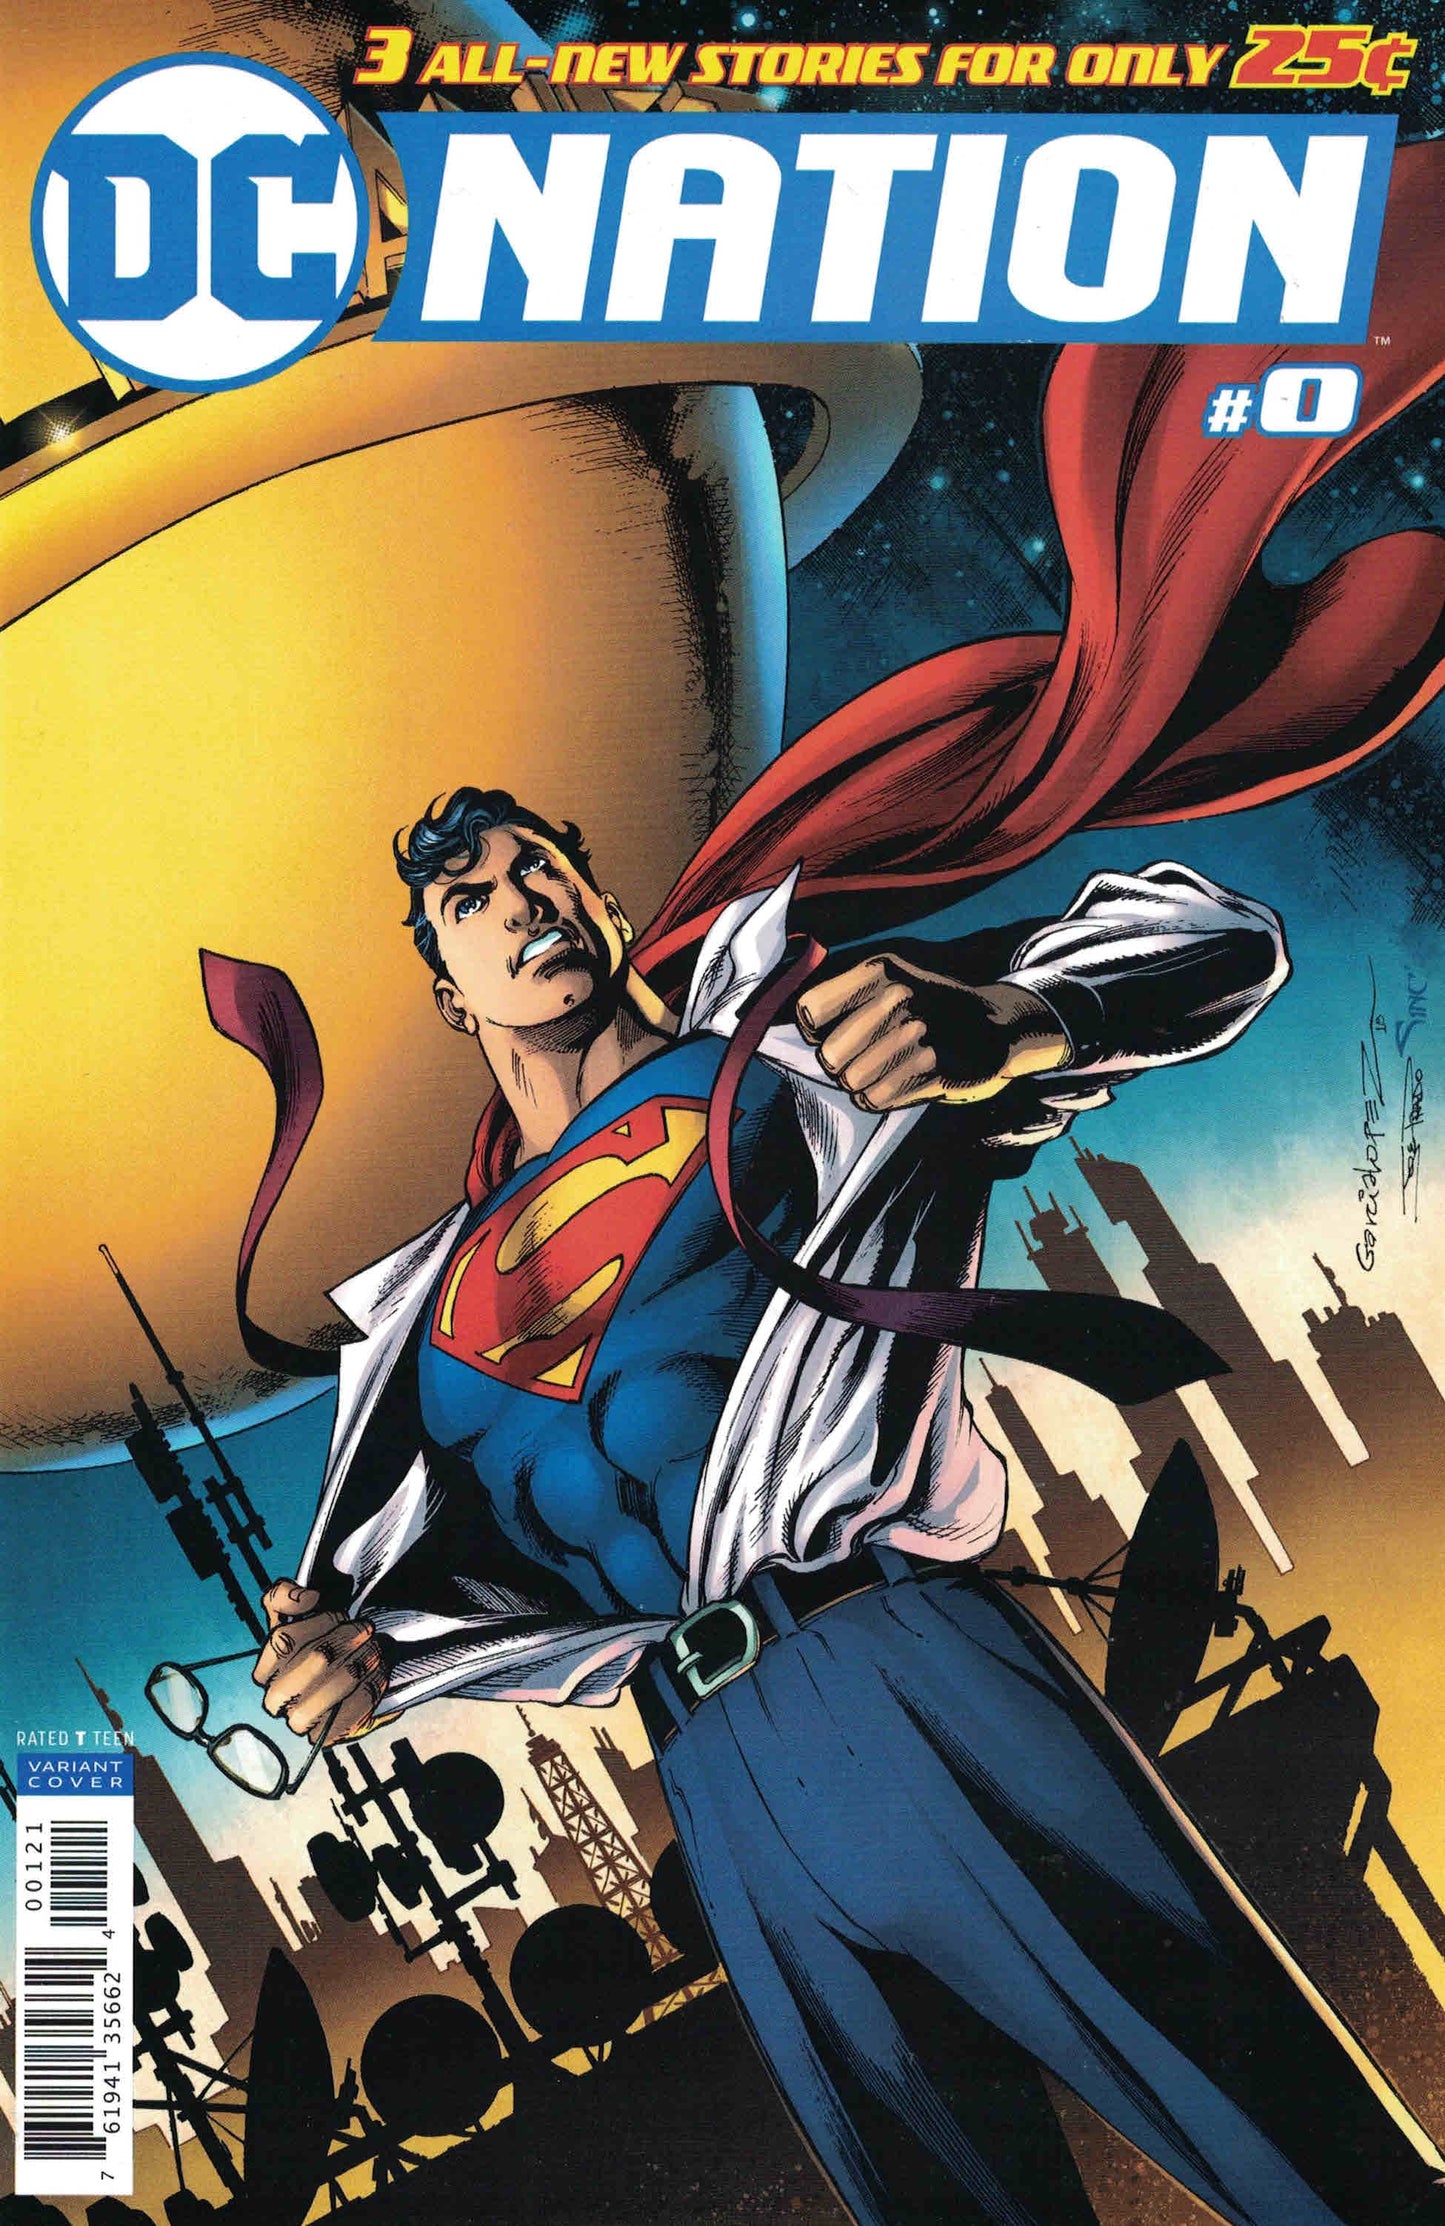 DC NATION #0 1:100 SUPERMAN VARIANT ED